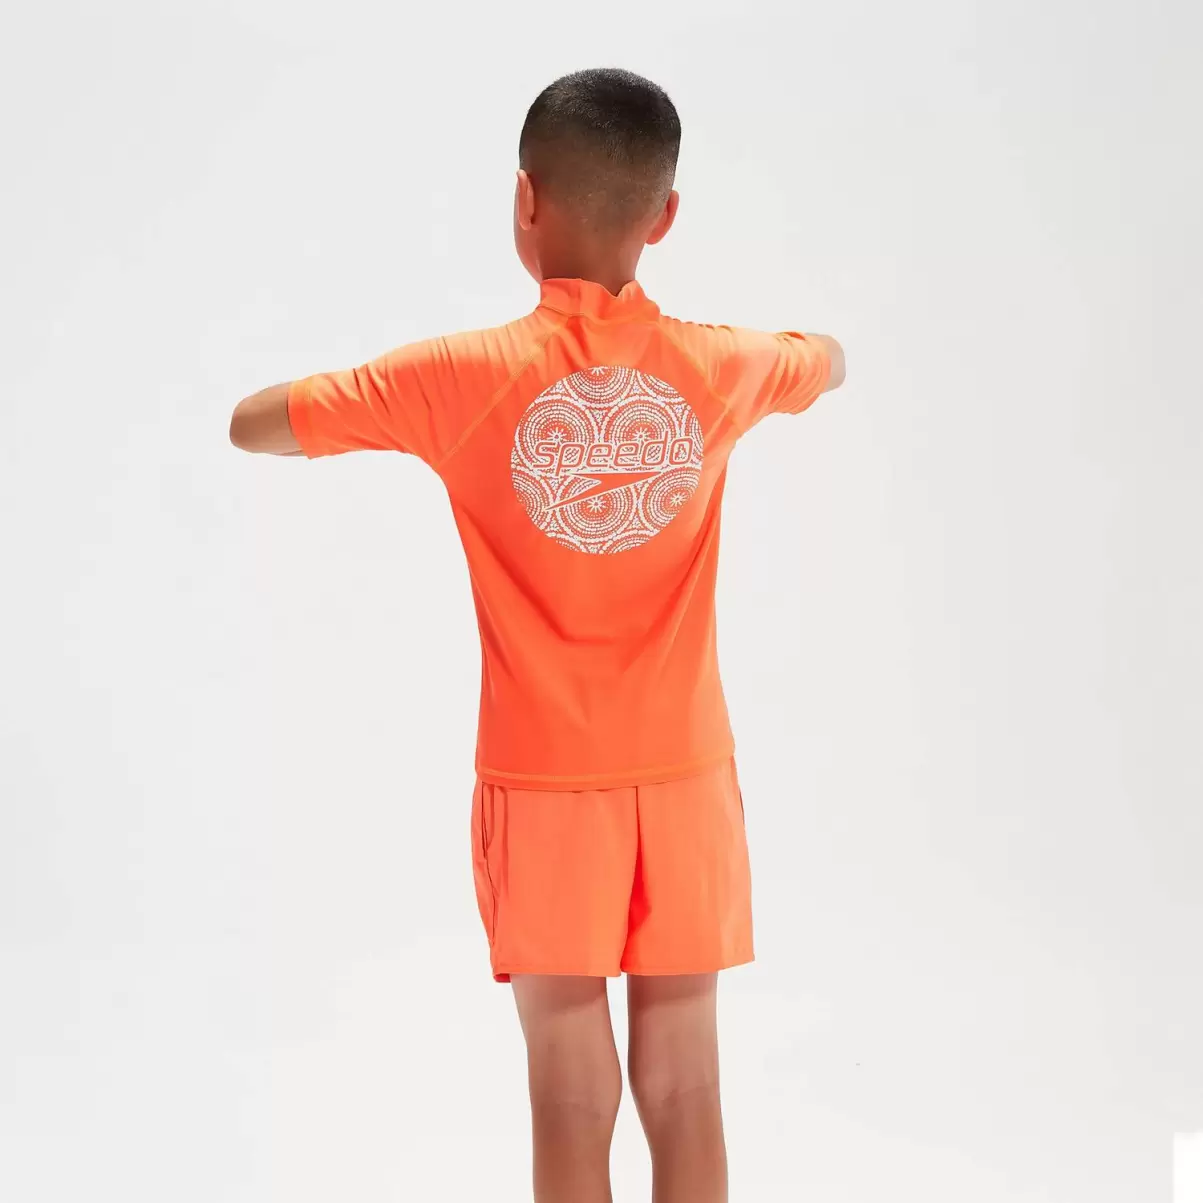 Speedo Kinder Bedrucktes Kurzärmeliges Rash-Top Für Jungen Orange Jungs Bademode - 1